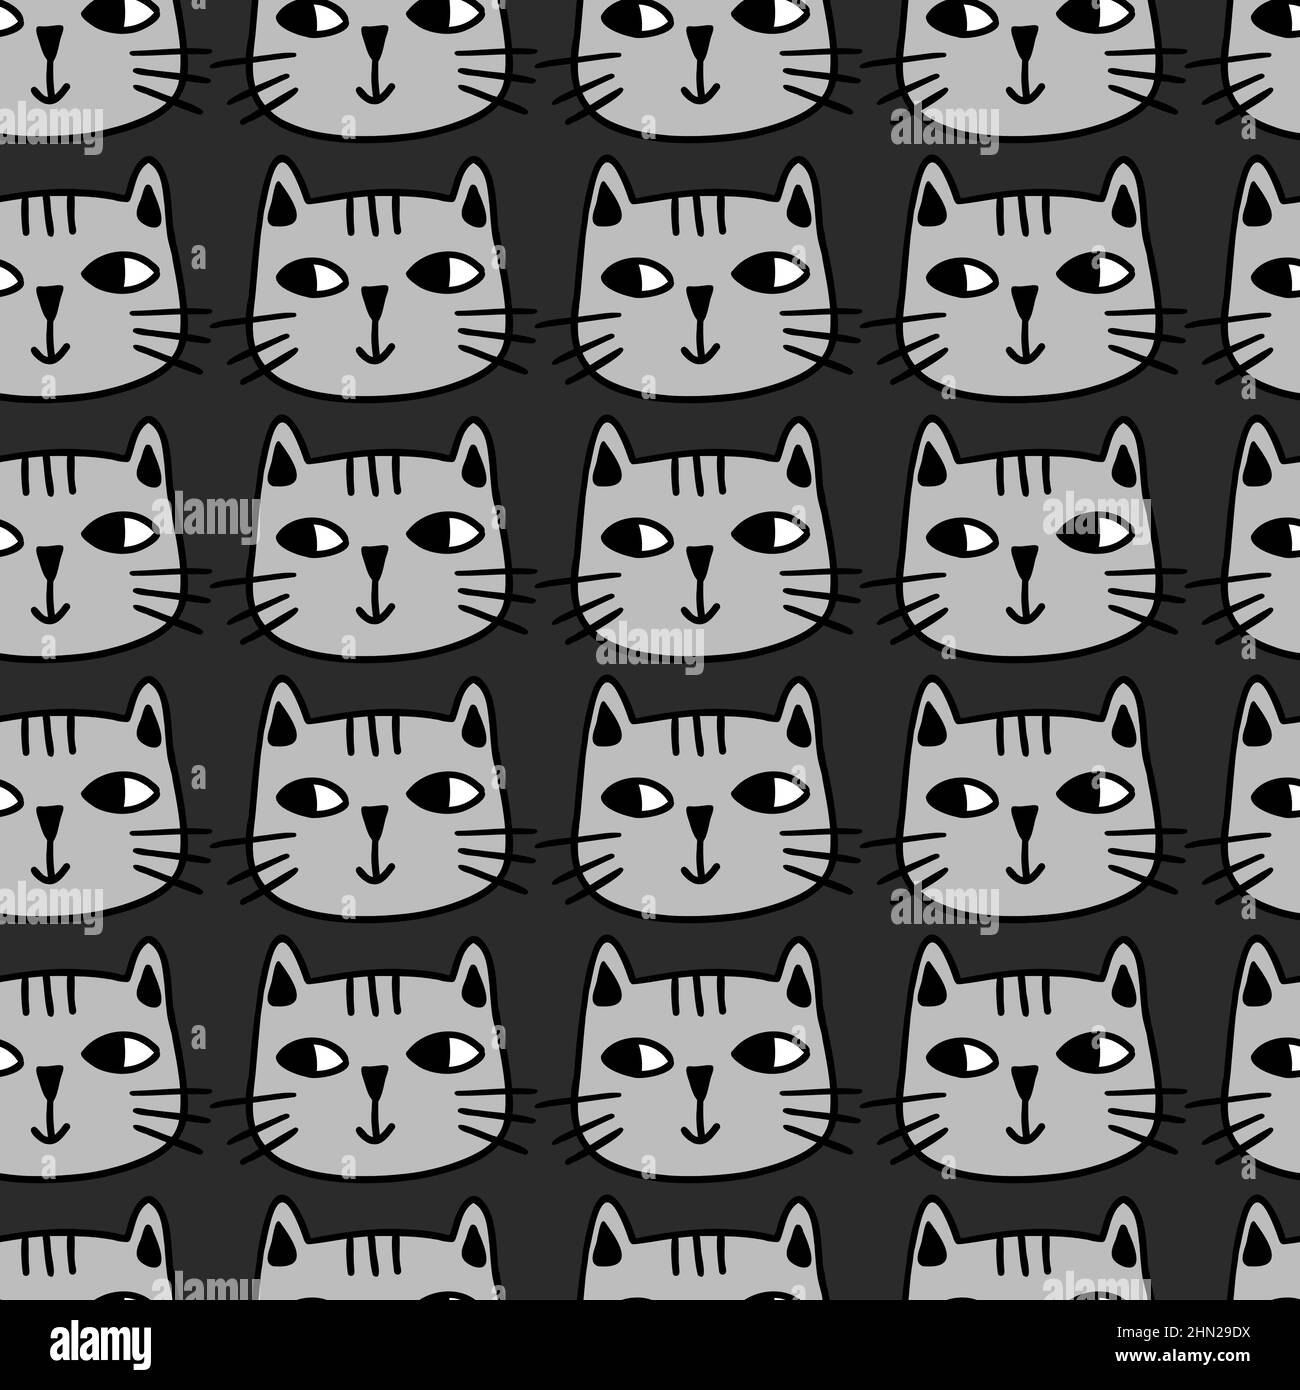 Cute cartoon cats seamless pattern. Vectorprint for t shirt, textile, fabric Stock Vector